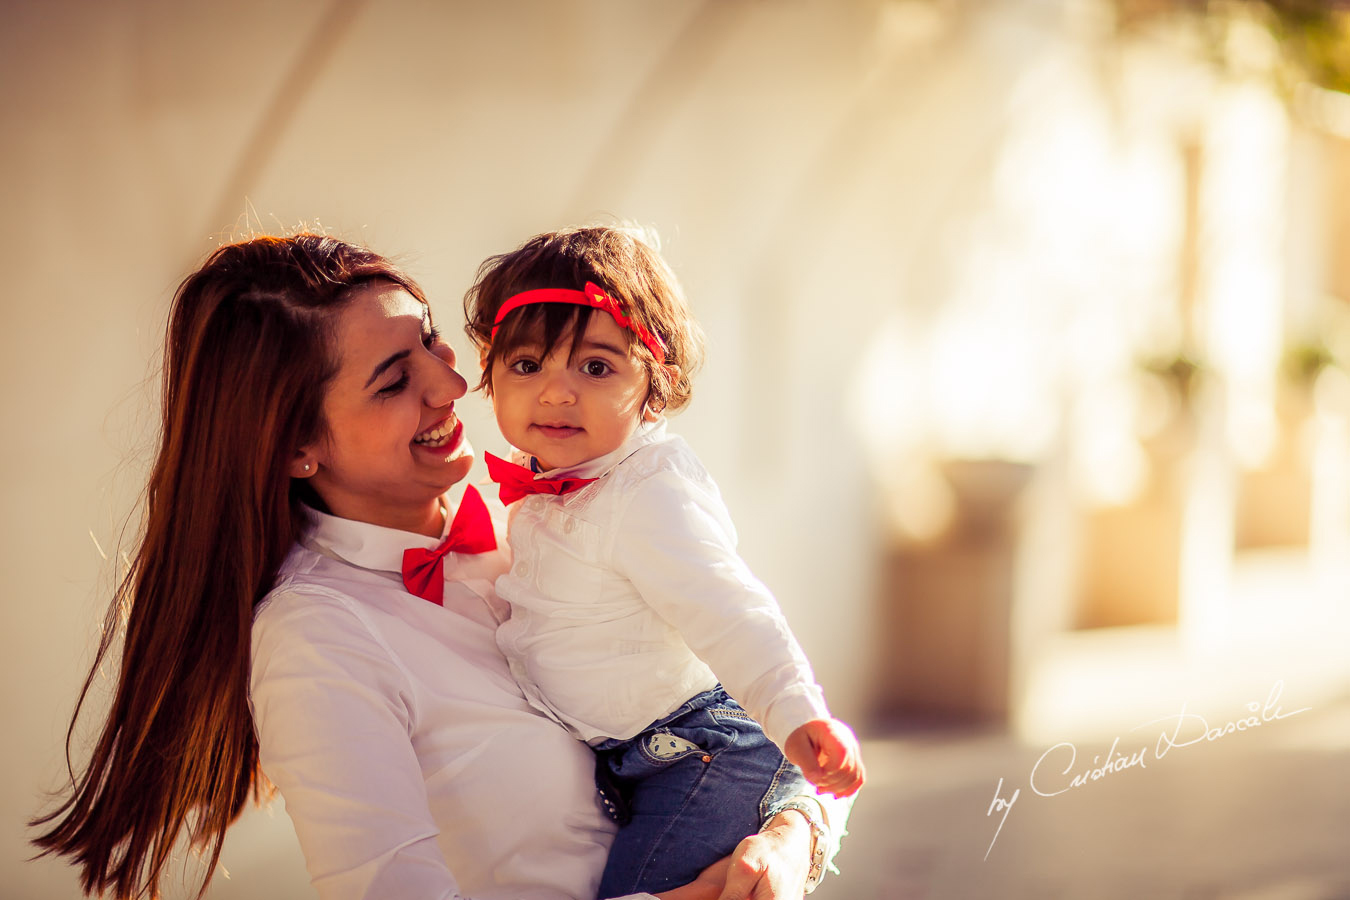 Family Photos in Cyprus , 4 Seasons, Limassol. Photographer: Cristian Dascalu